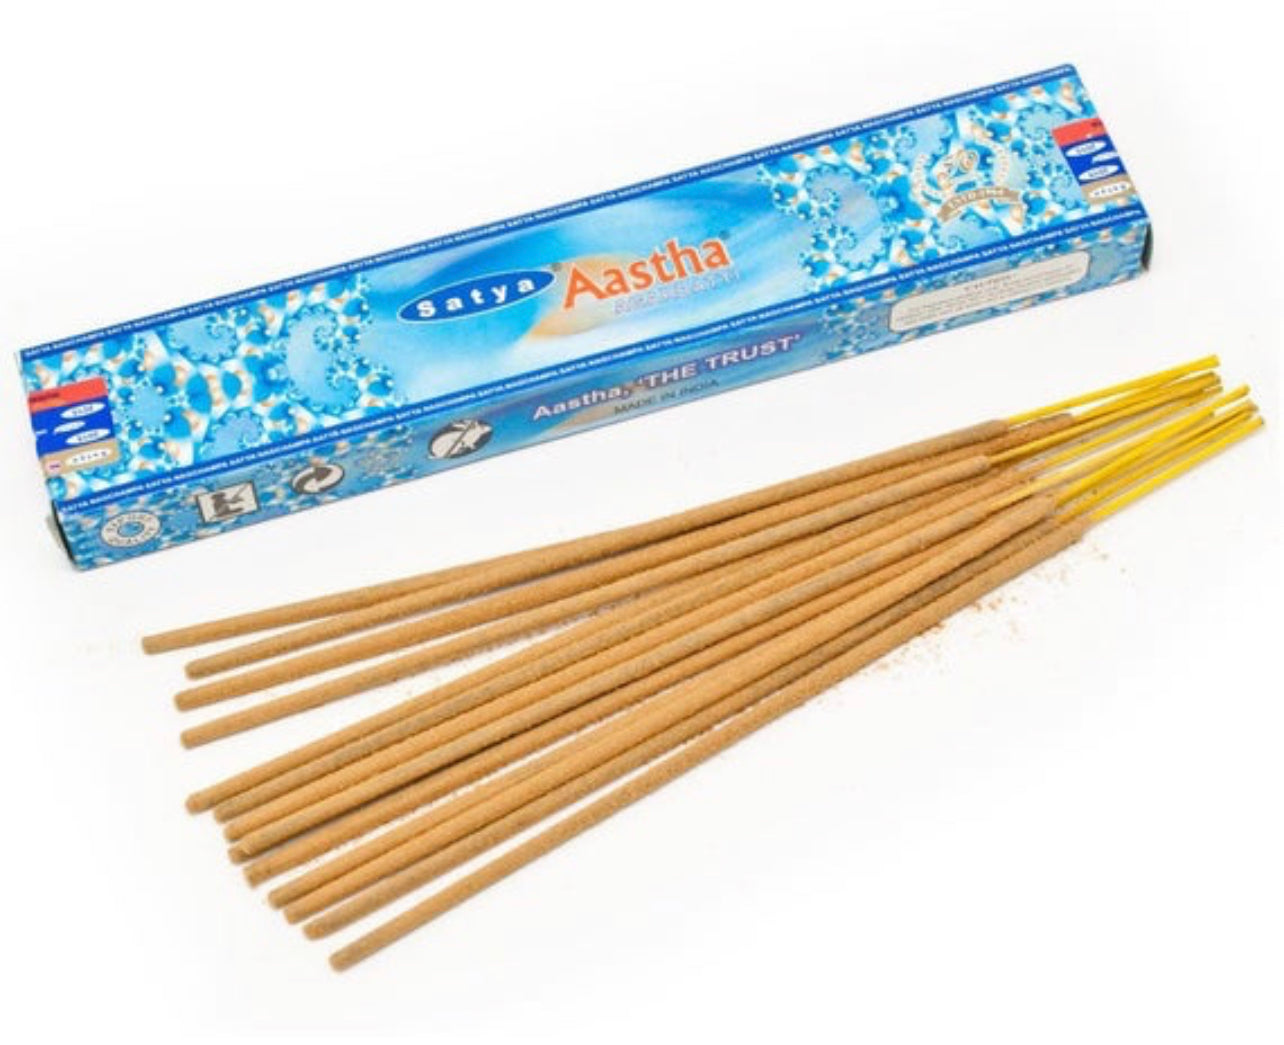 Satya Premium Original Indian Incense Sticks